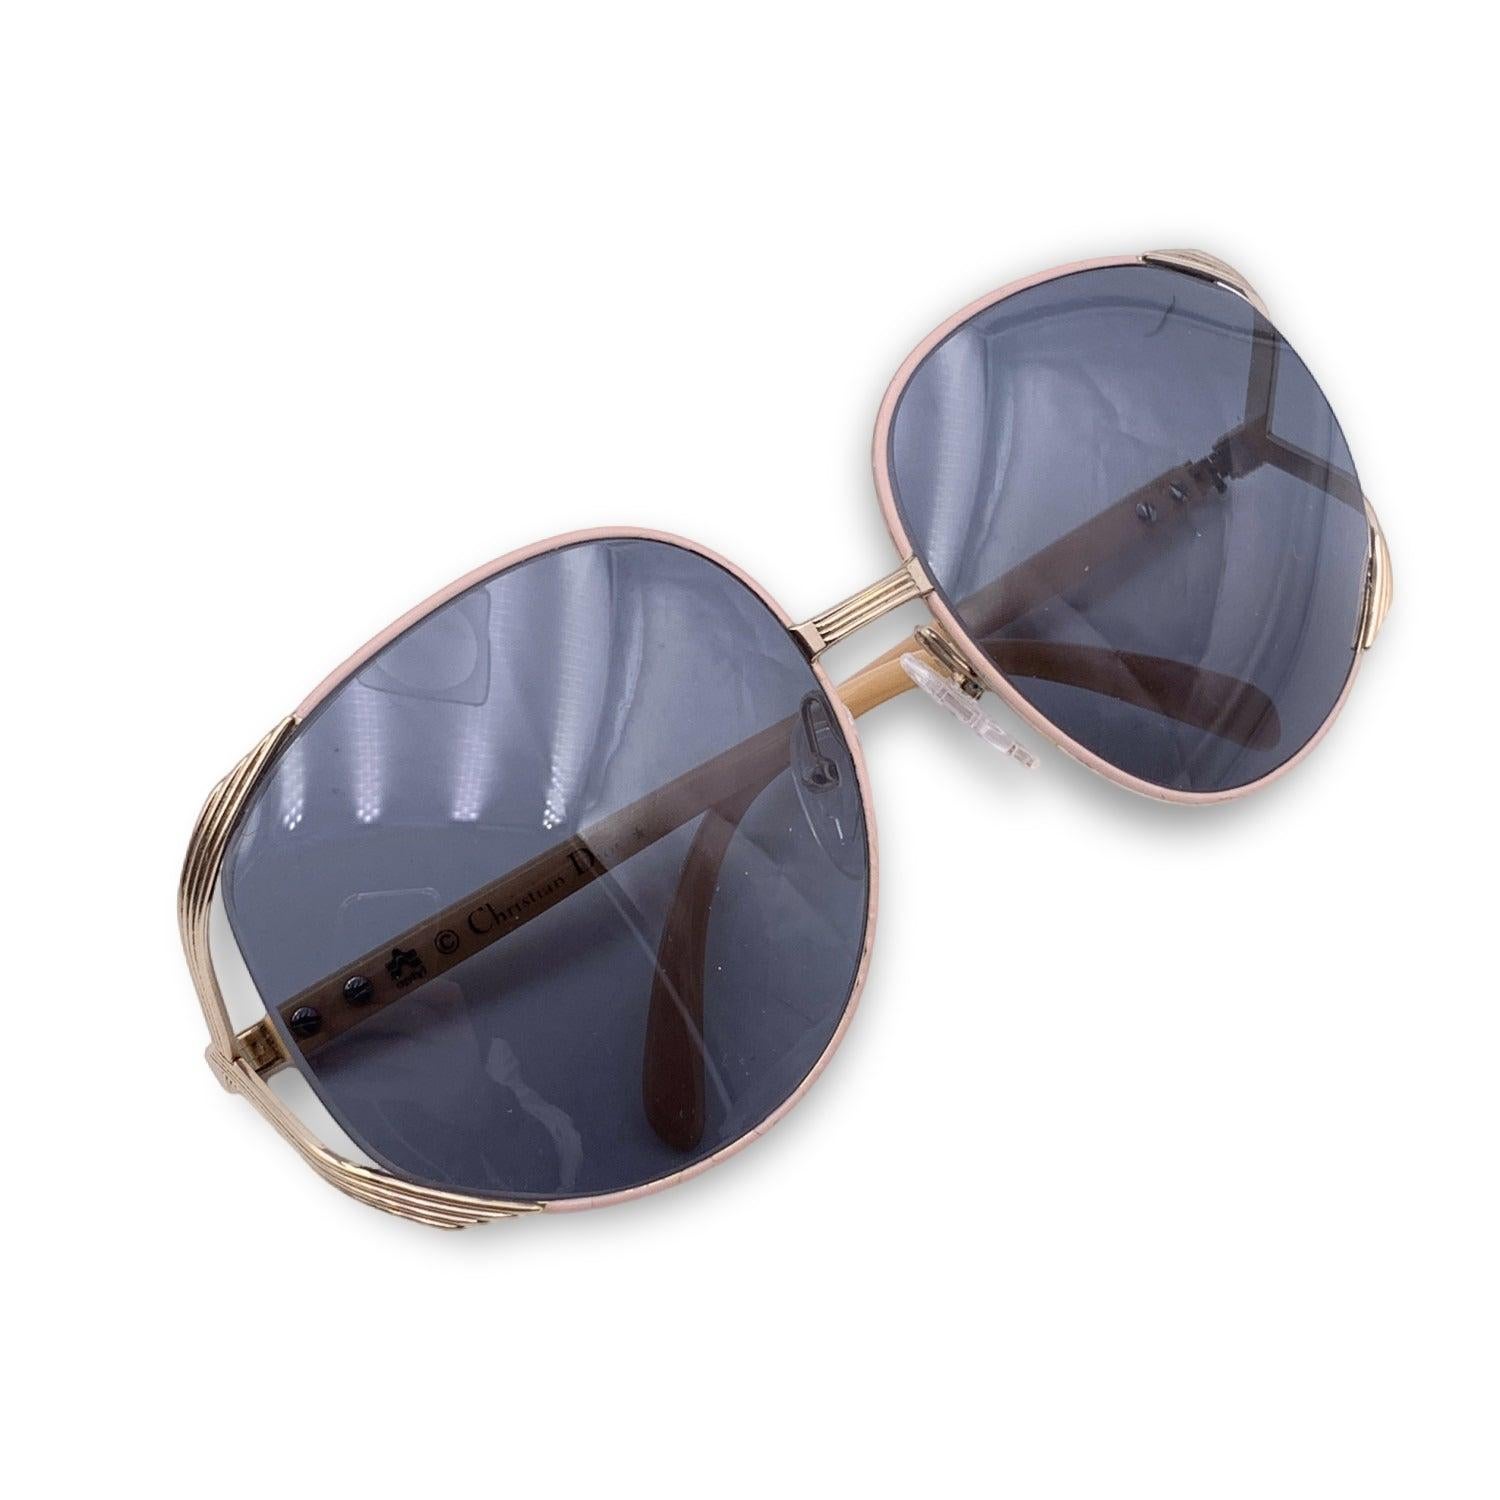 Vintage Christian Dior sunglasses, Mod. 2250. Gold metal frame with baby pink enameled details. Original 100% Total UVA/UVB protection in grey color. CD logo on temples. Pink Optyl ear stems. Details MATERIAL: Metal COLOR: Pink MODEL: 2250 GENDER: